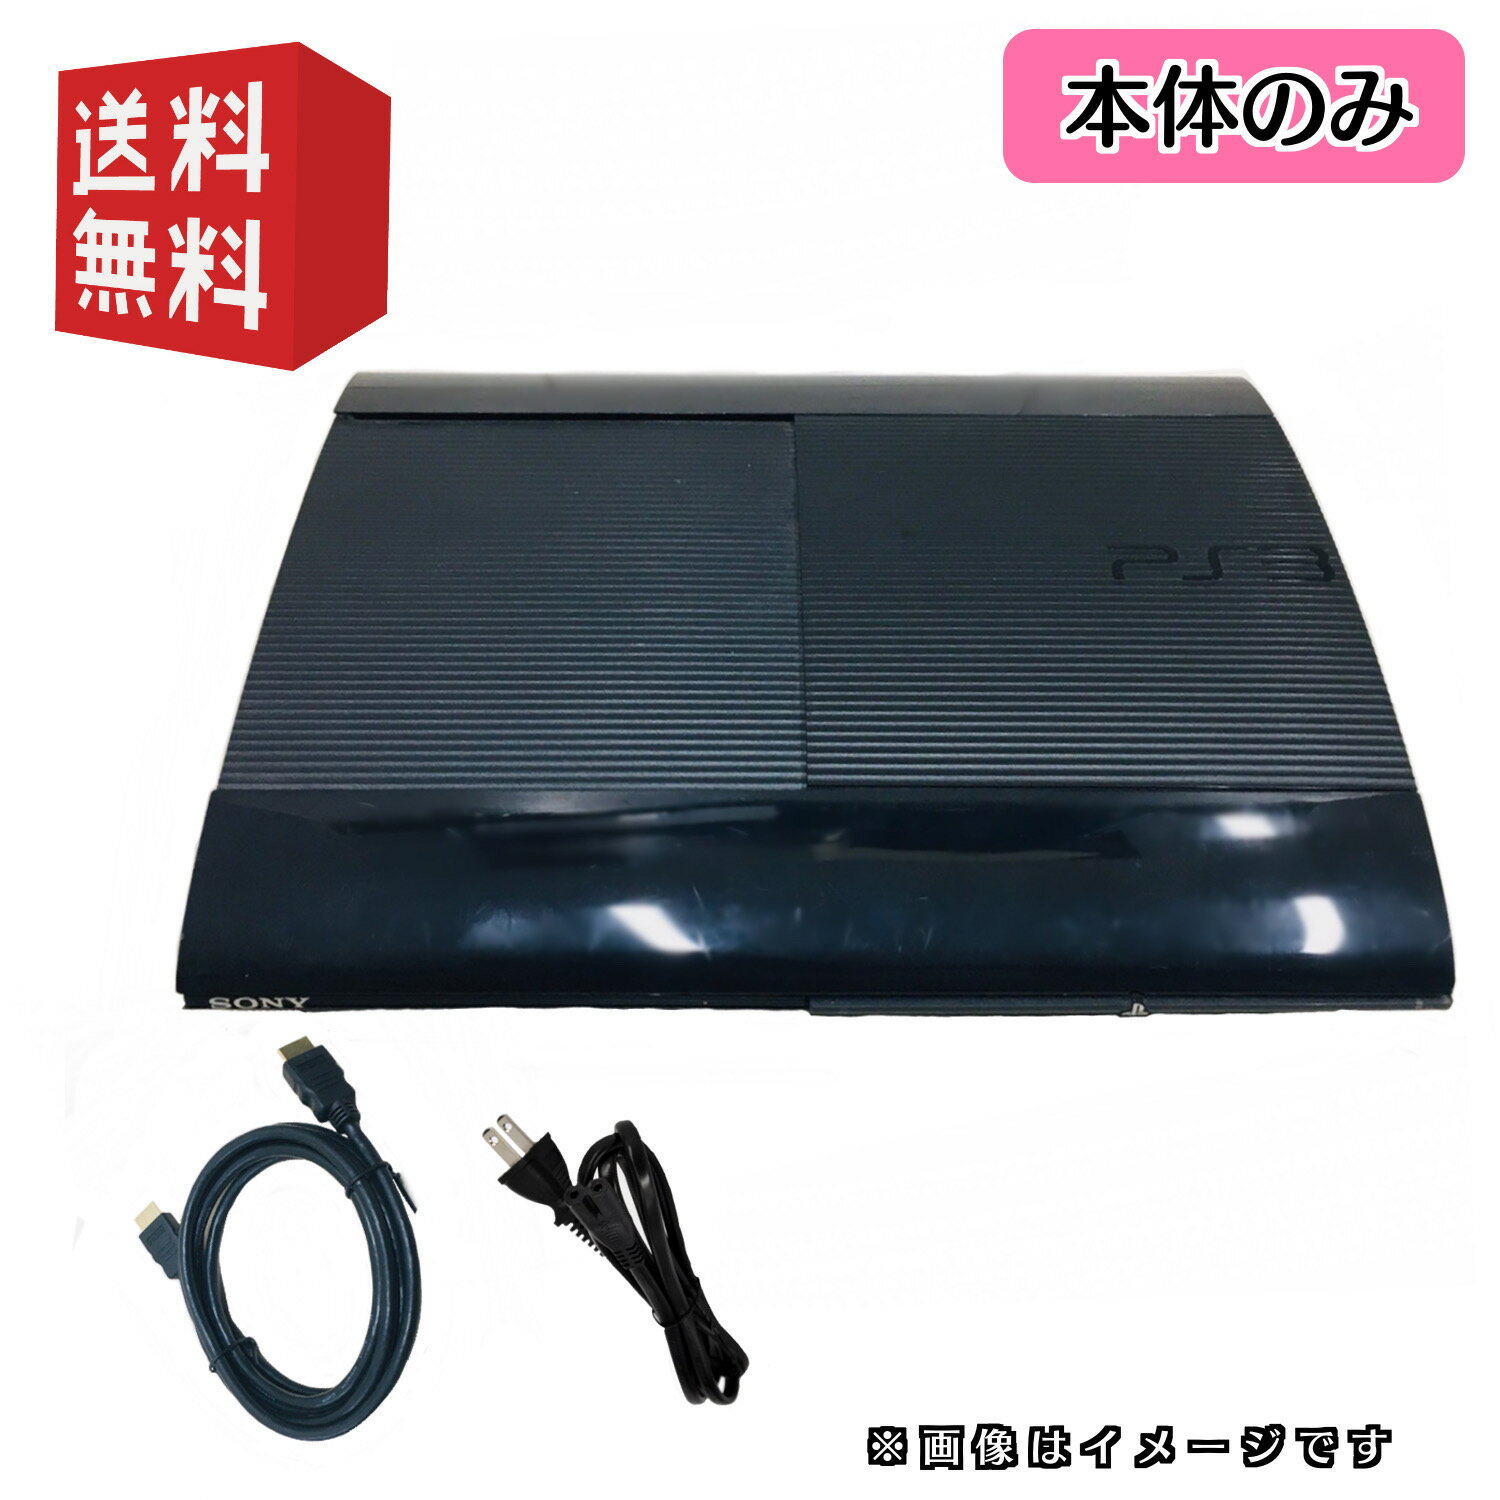 PS3 後期型 本体 【電源 HDMIケーブル付属】250GB 選べるカラー チャコールブラック/クラシックホワイト PlayStation 3 プレイステーション3 (CECH-4000シリーズ)